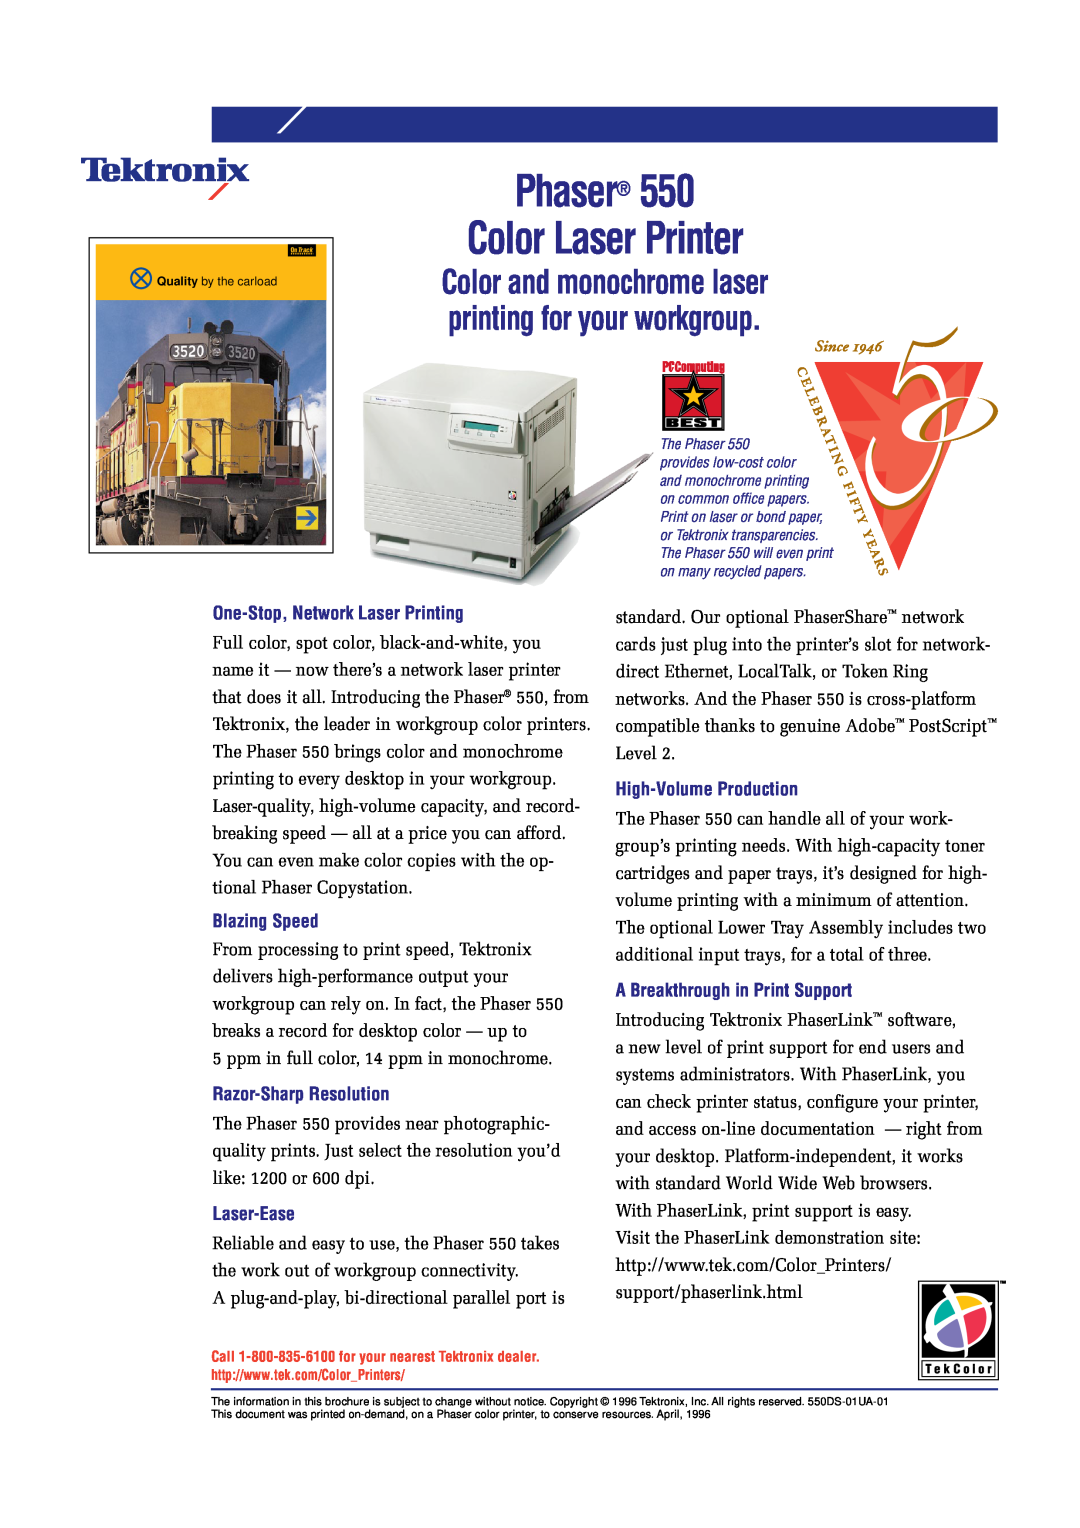 Tektronix 550 brochure Phaser Color Laser Printer, One-Stop, Network Laser Printing, Blazing Speed, Razor-Sharp Resolution 